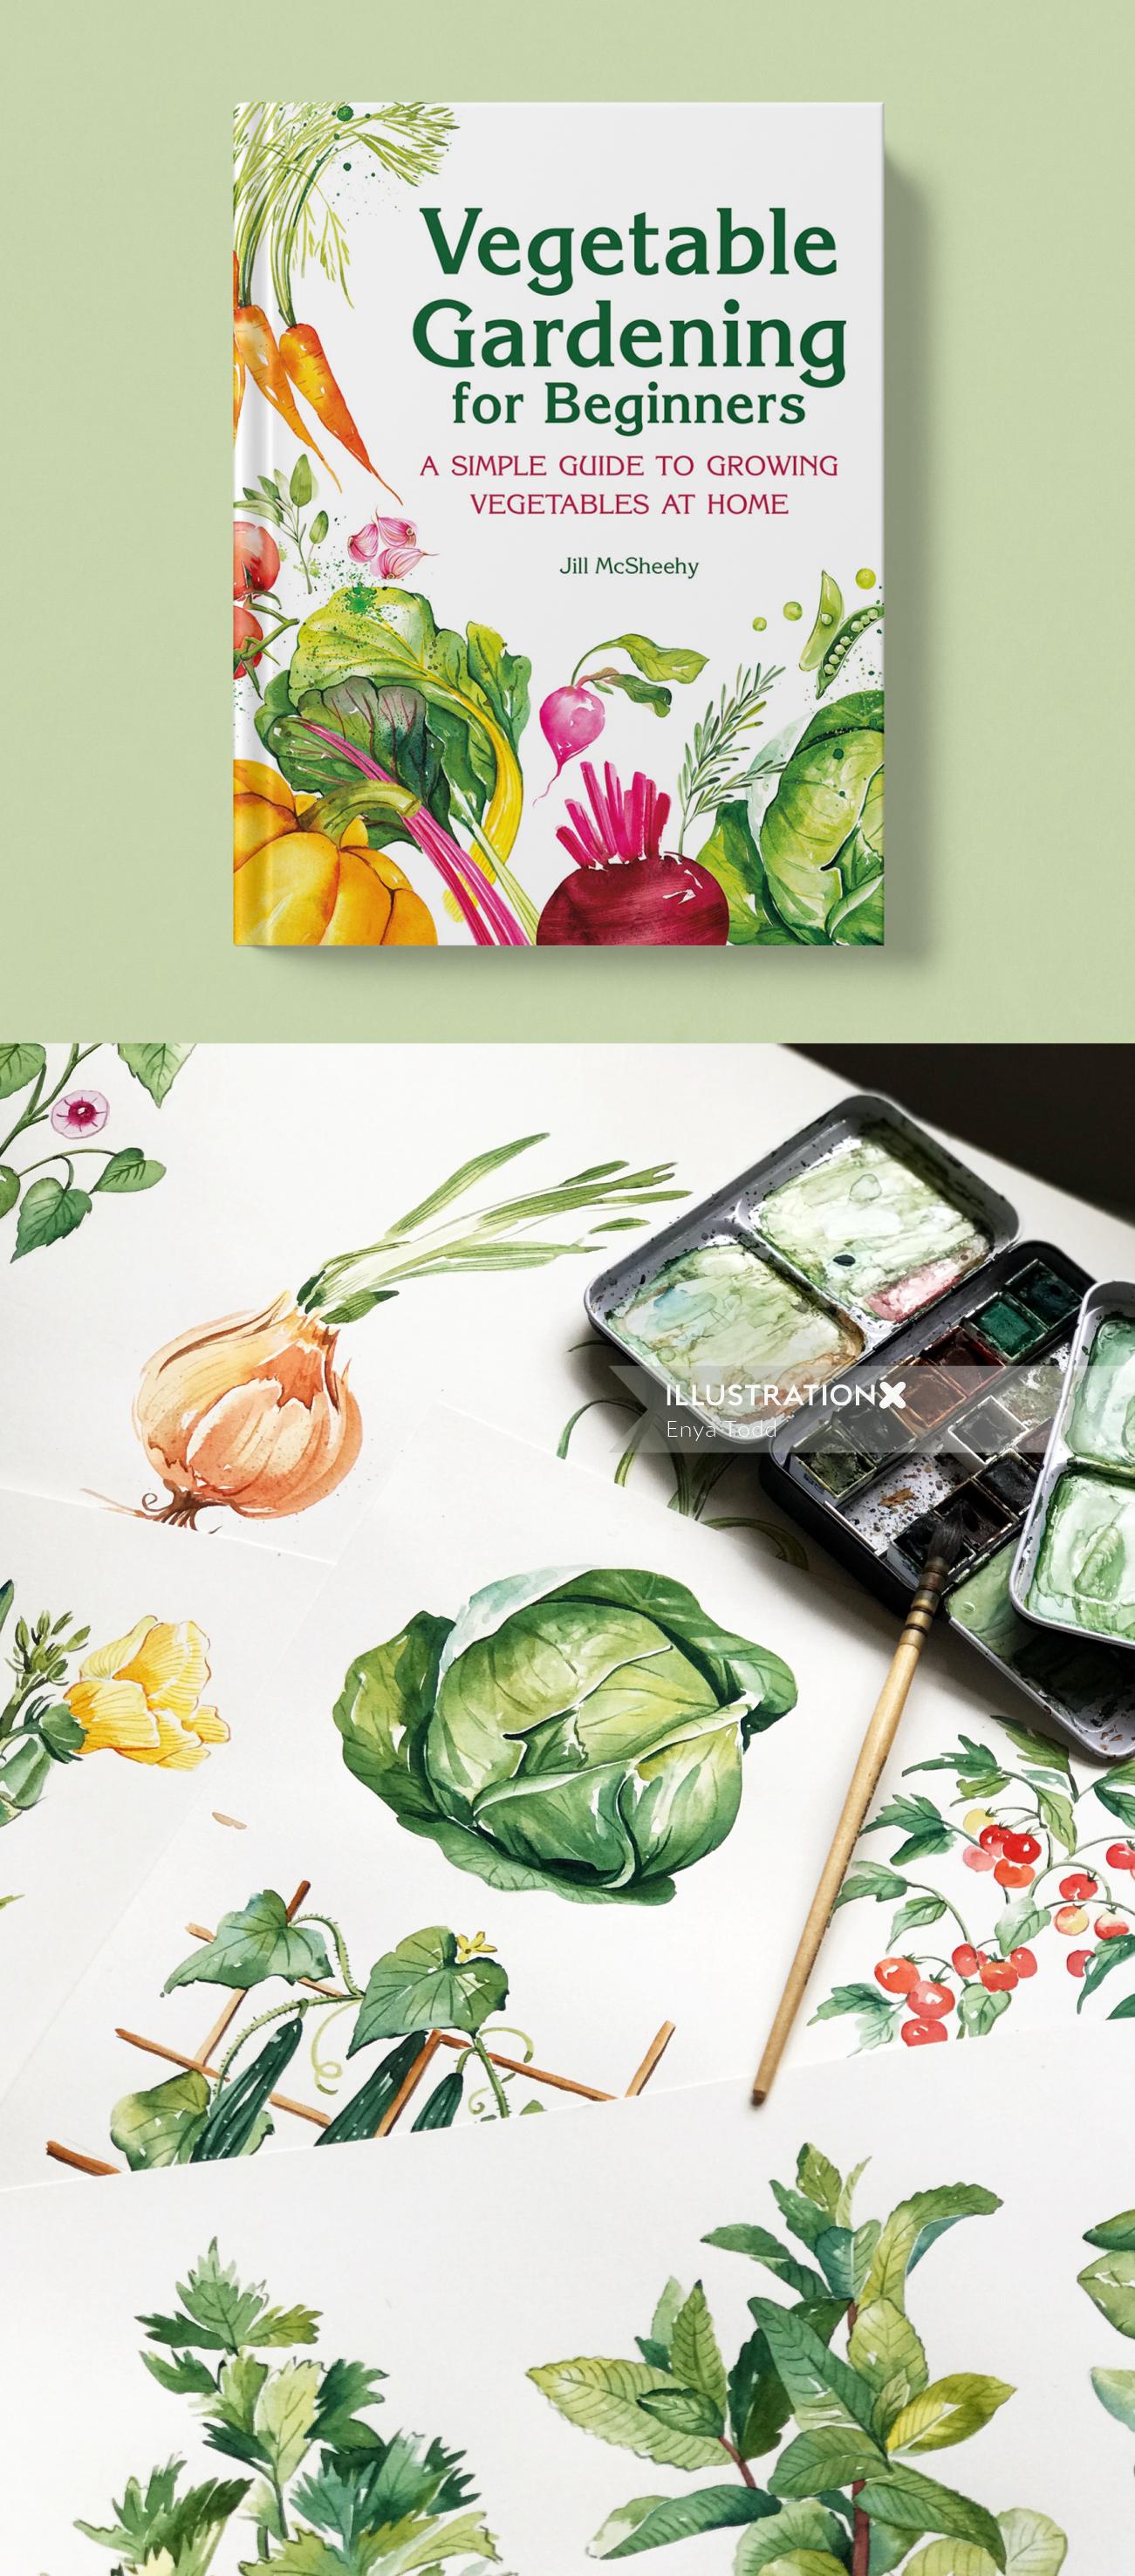 Vegetables artwork for book cover